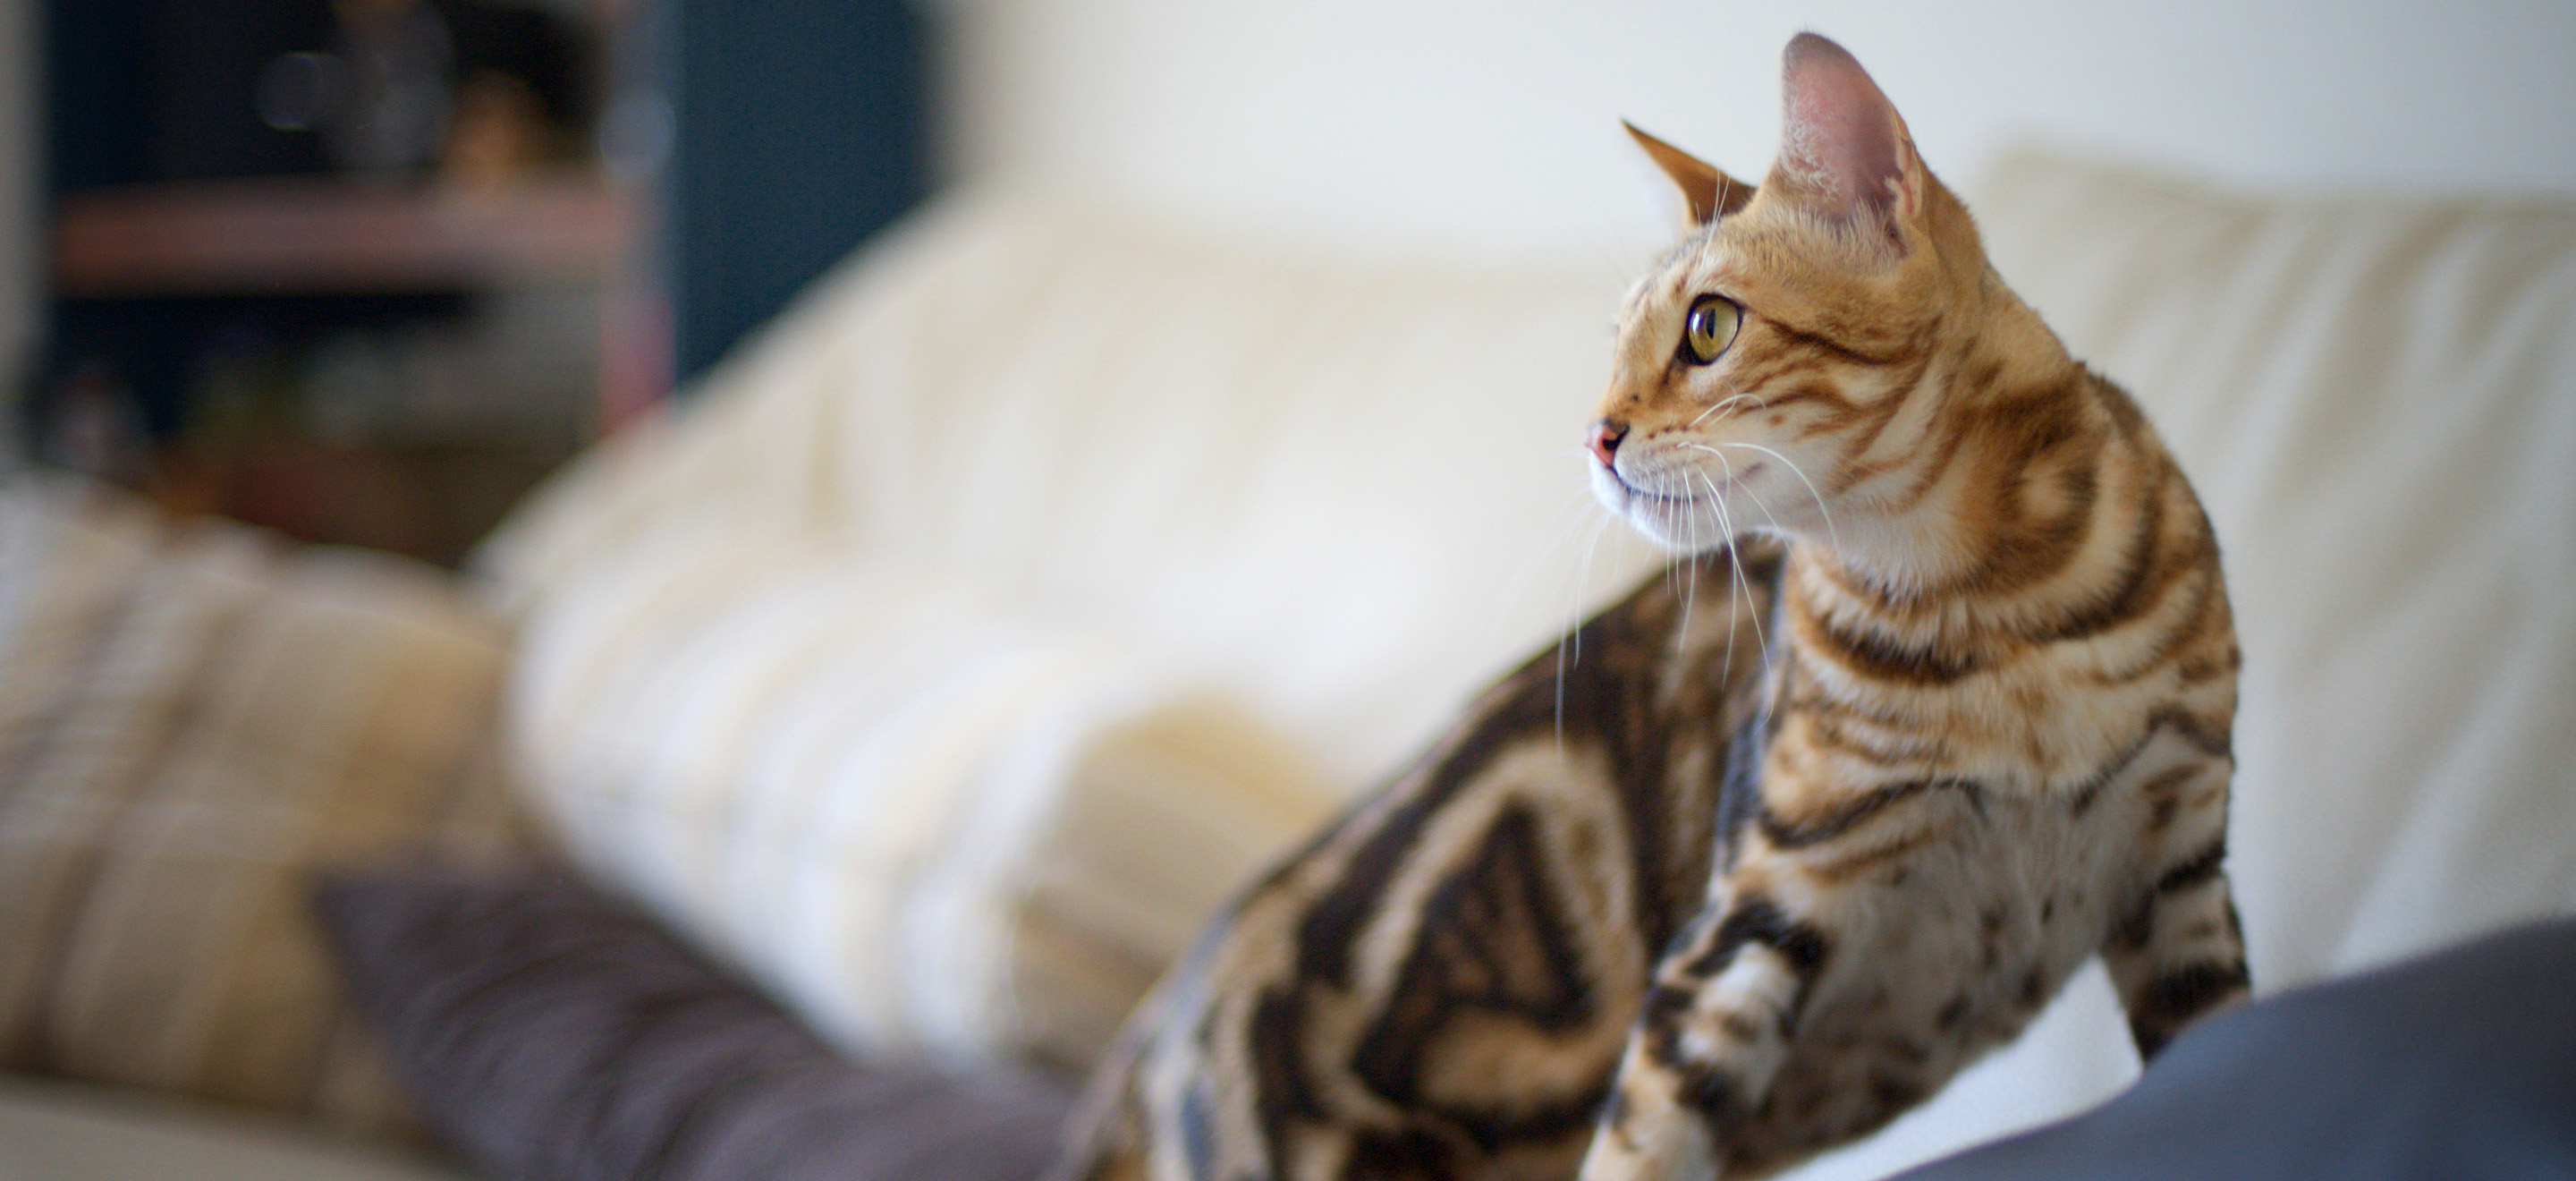 Bengal kitten on a sofa image